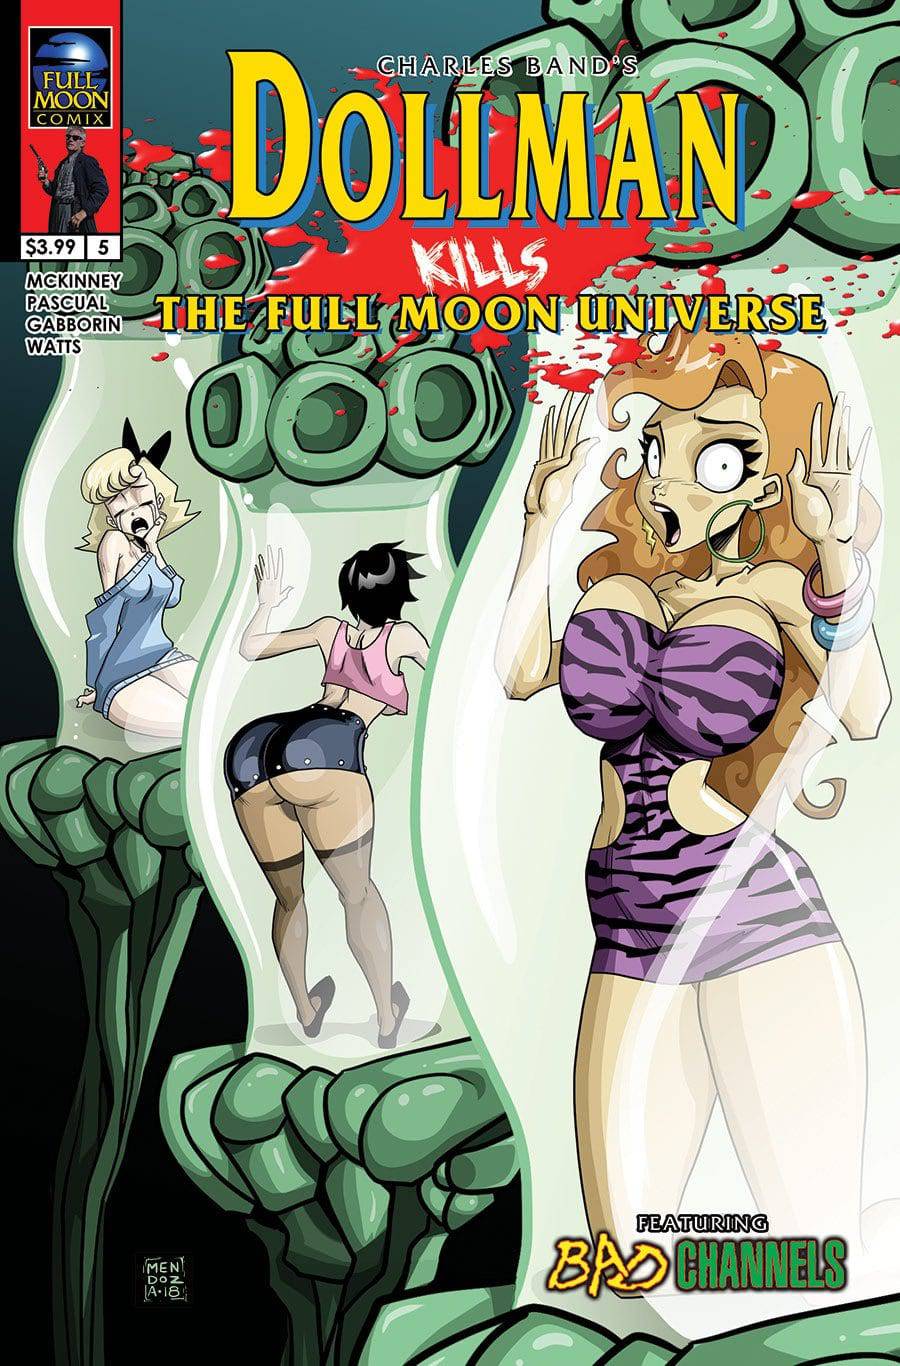 Dollman Kills The Full Moon Universe #5 (Dan Mendoza cover)